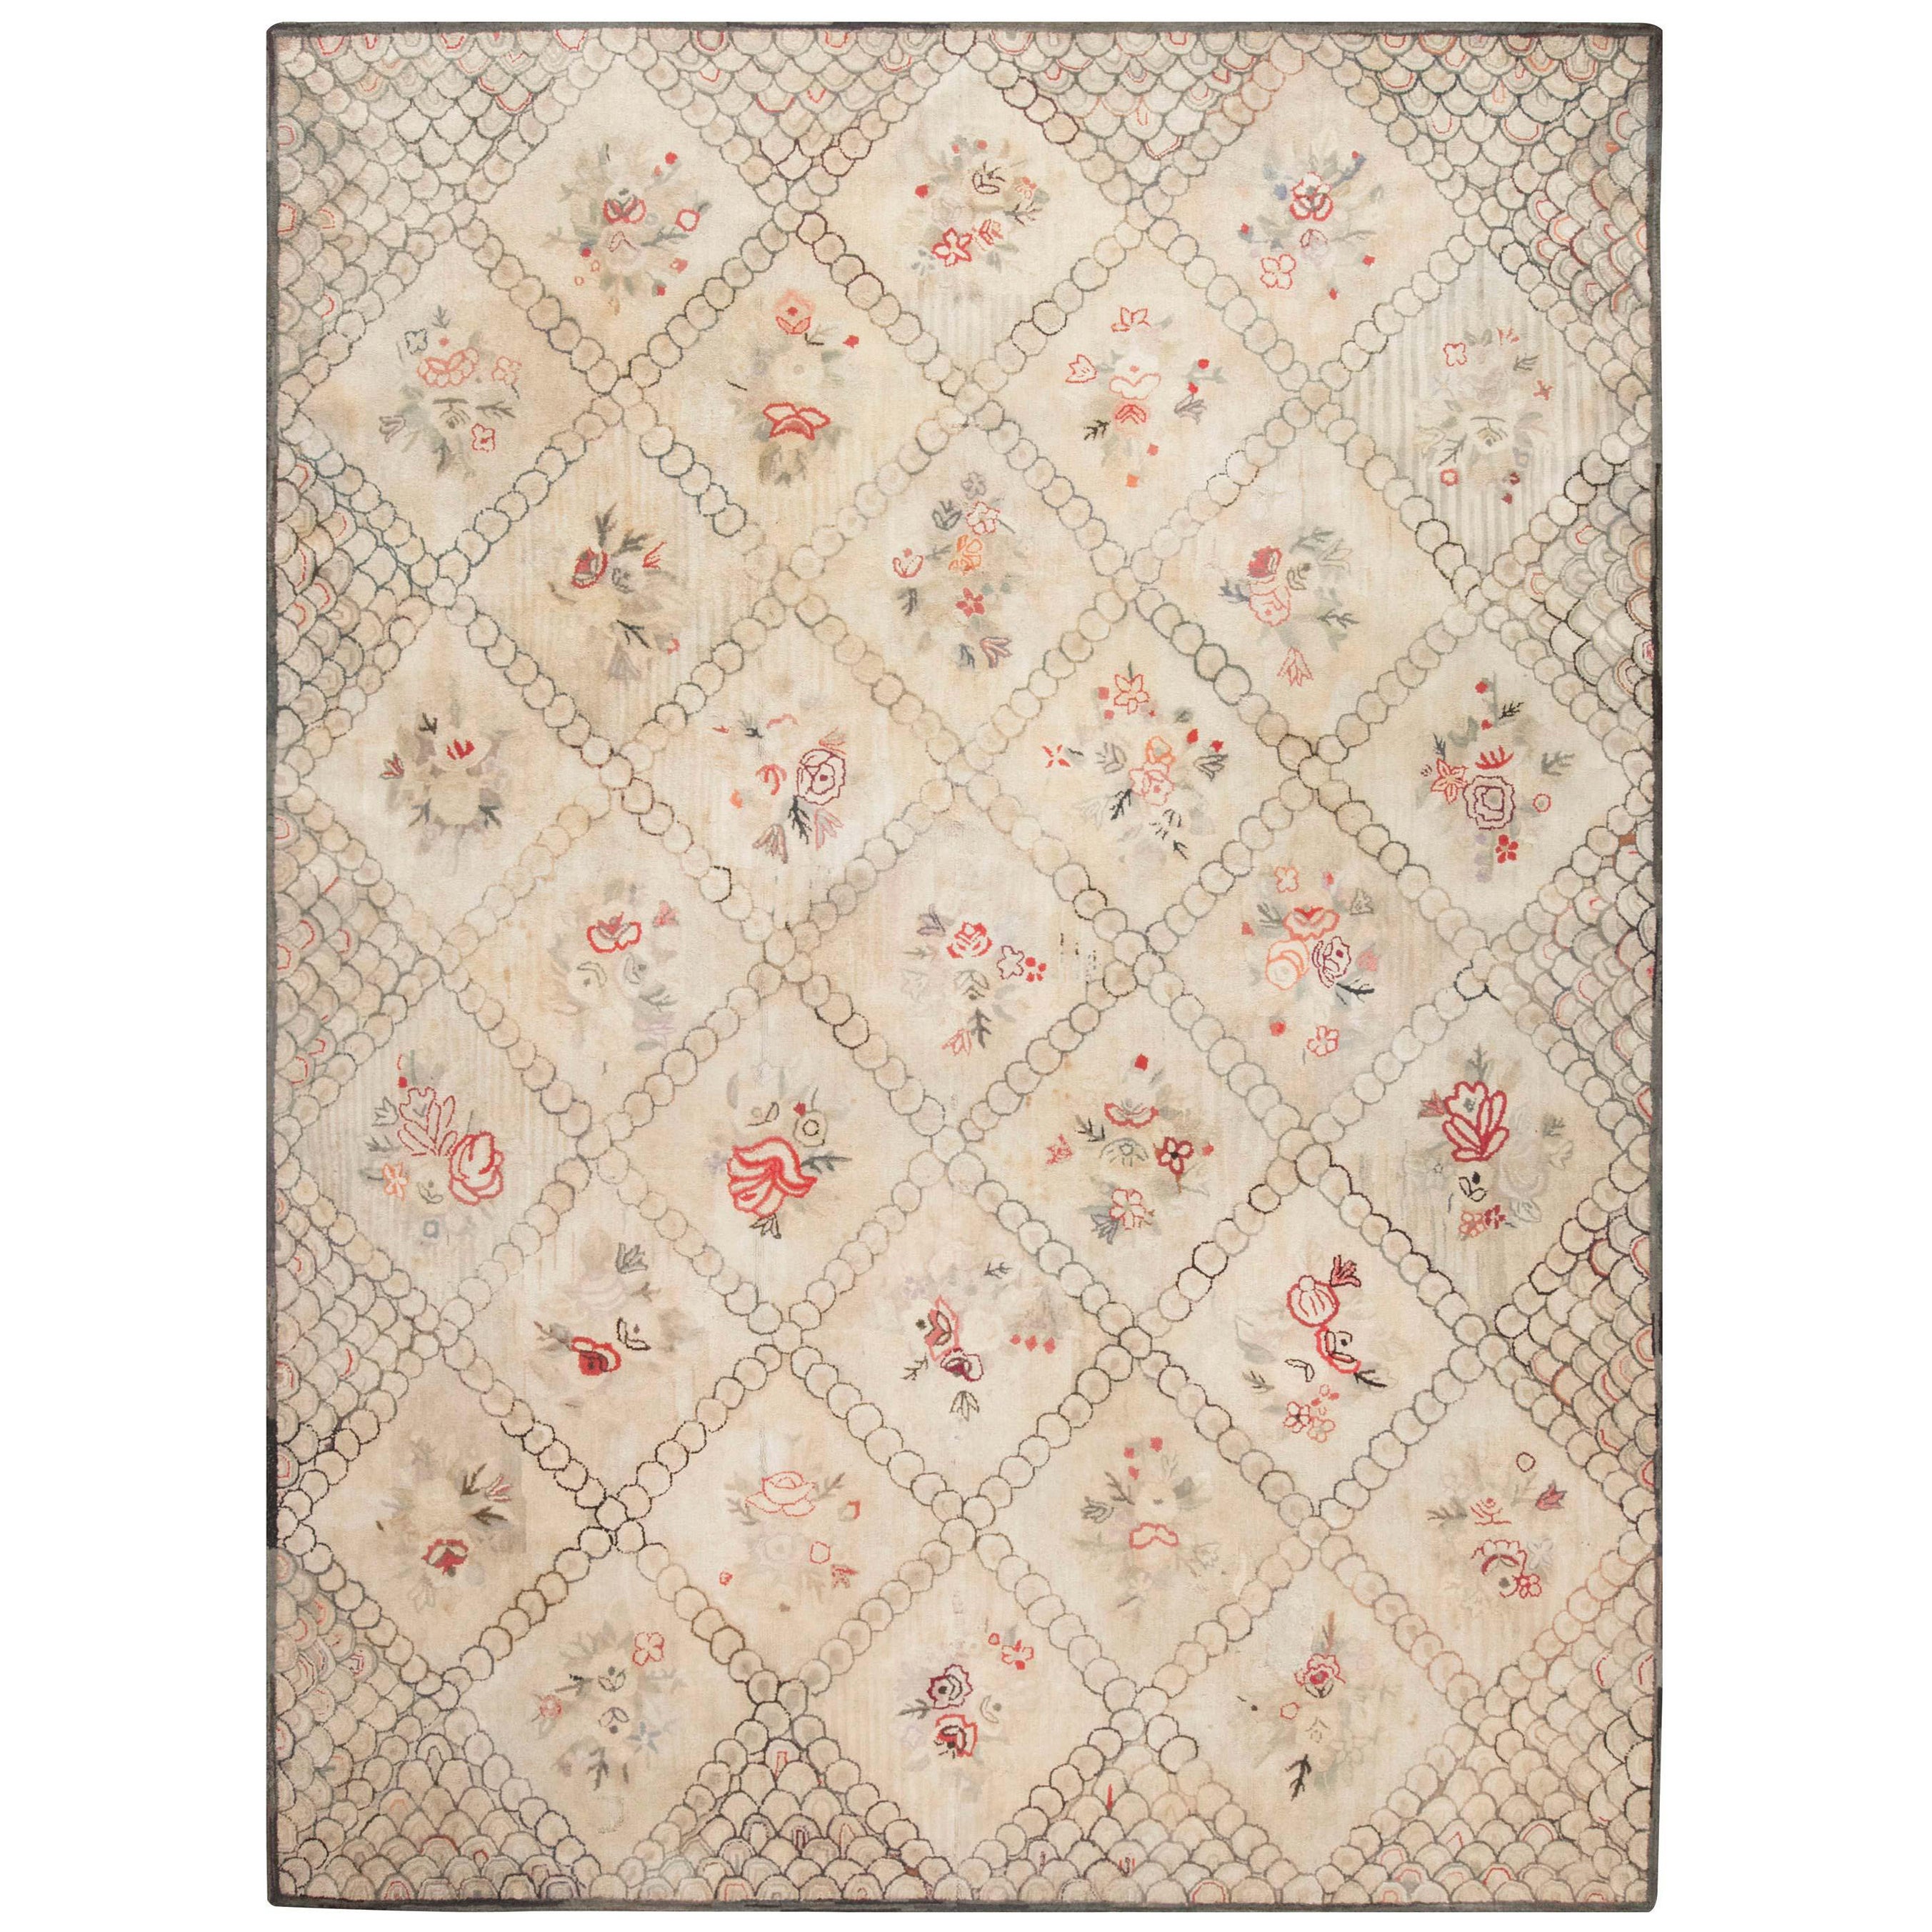 Vintage Hooked Floral Handmade Wool Teppich